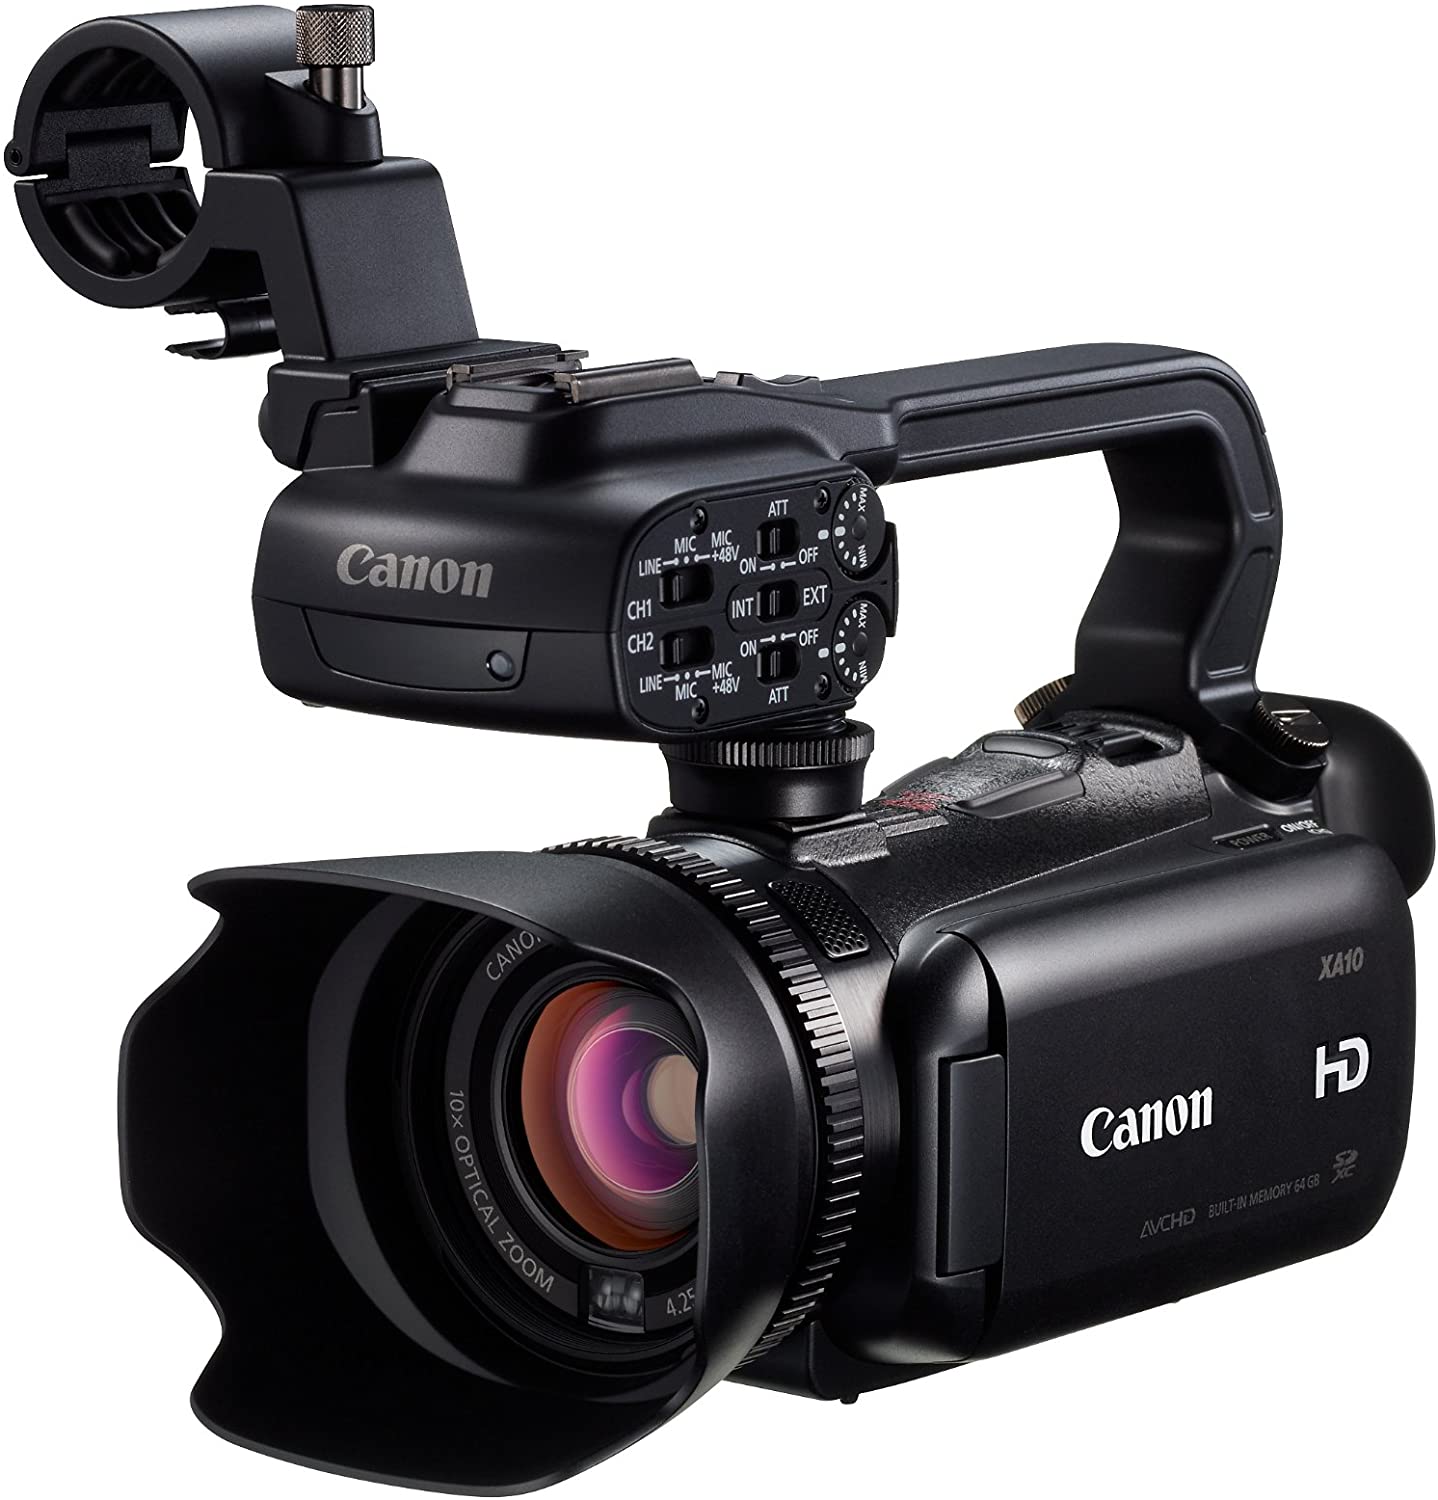 Rental Canon XA10 Professional Camcorder Rental - R450 P/Day Camera tek